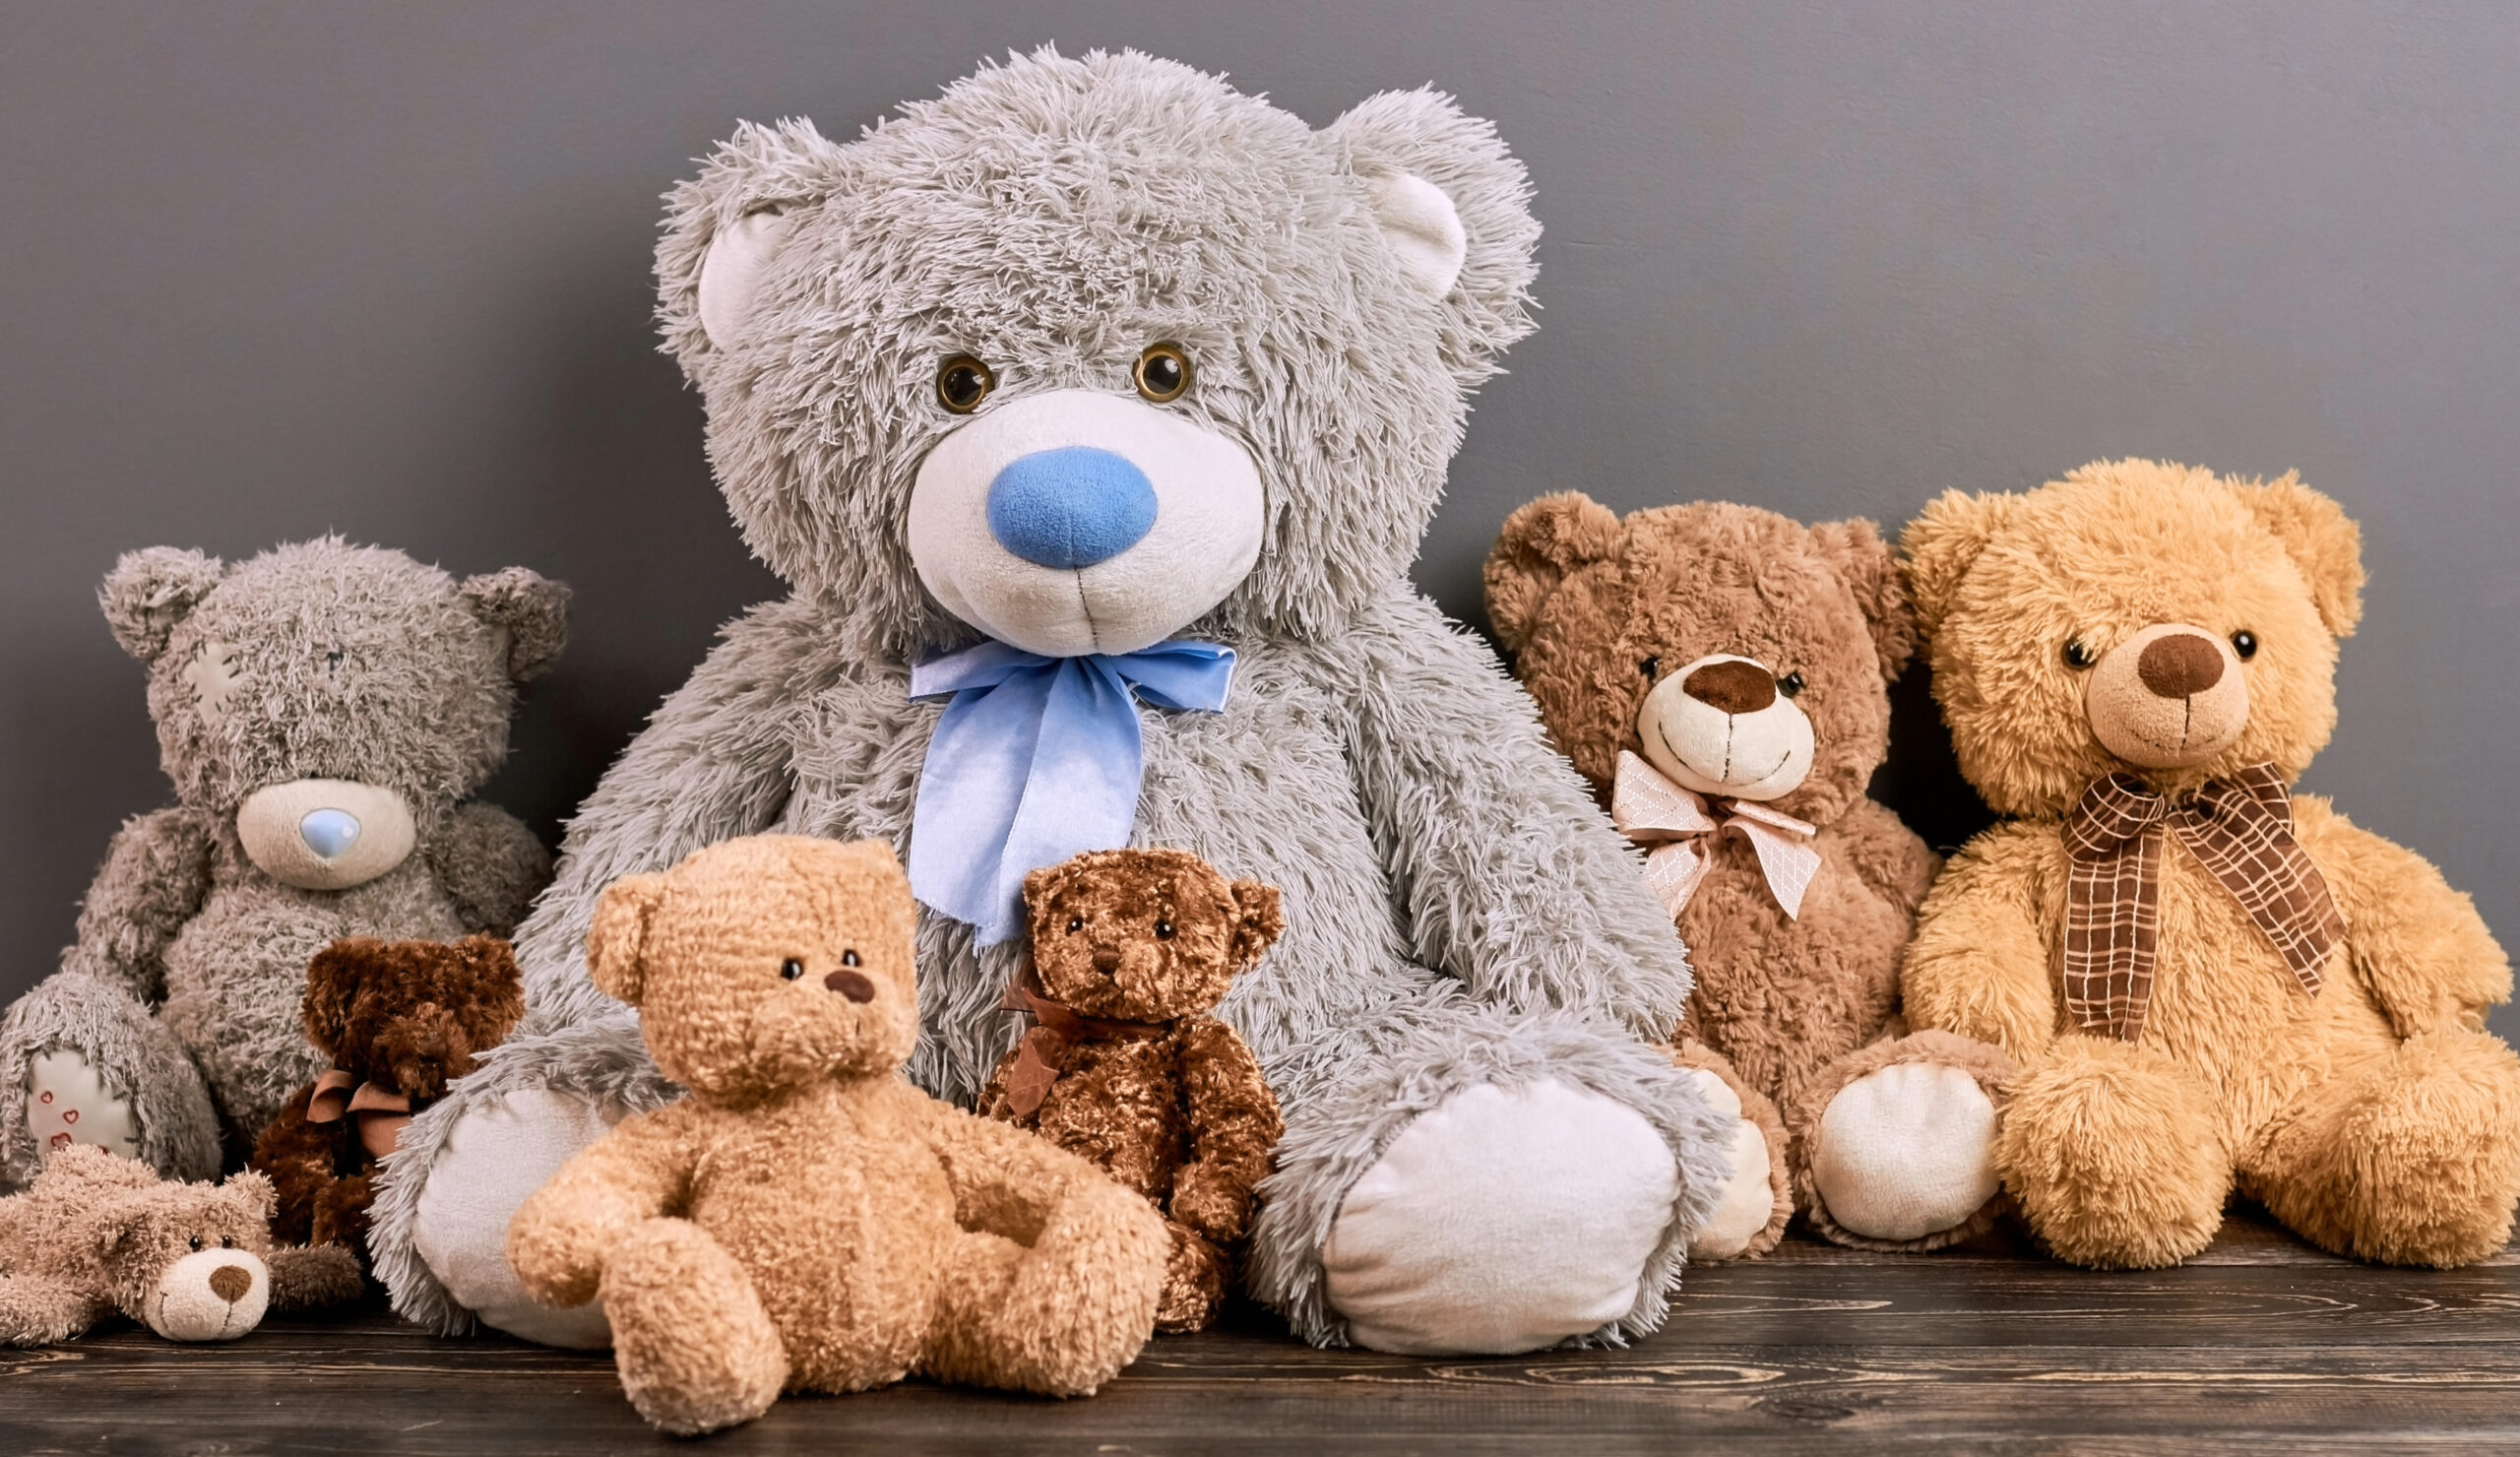 Teddy bears for Davis House Stuffed Animal Drive